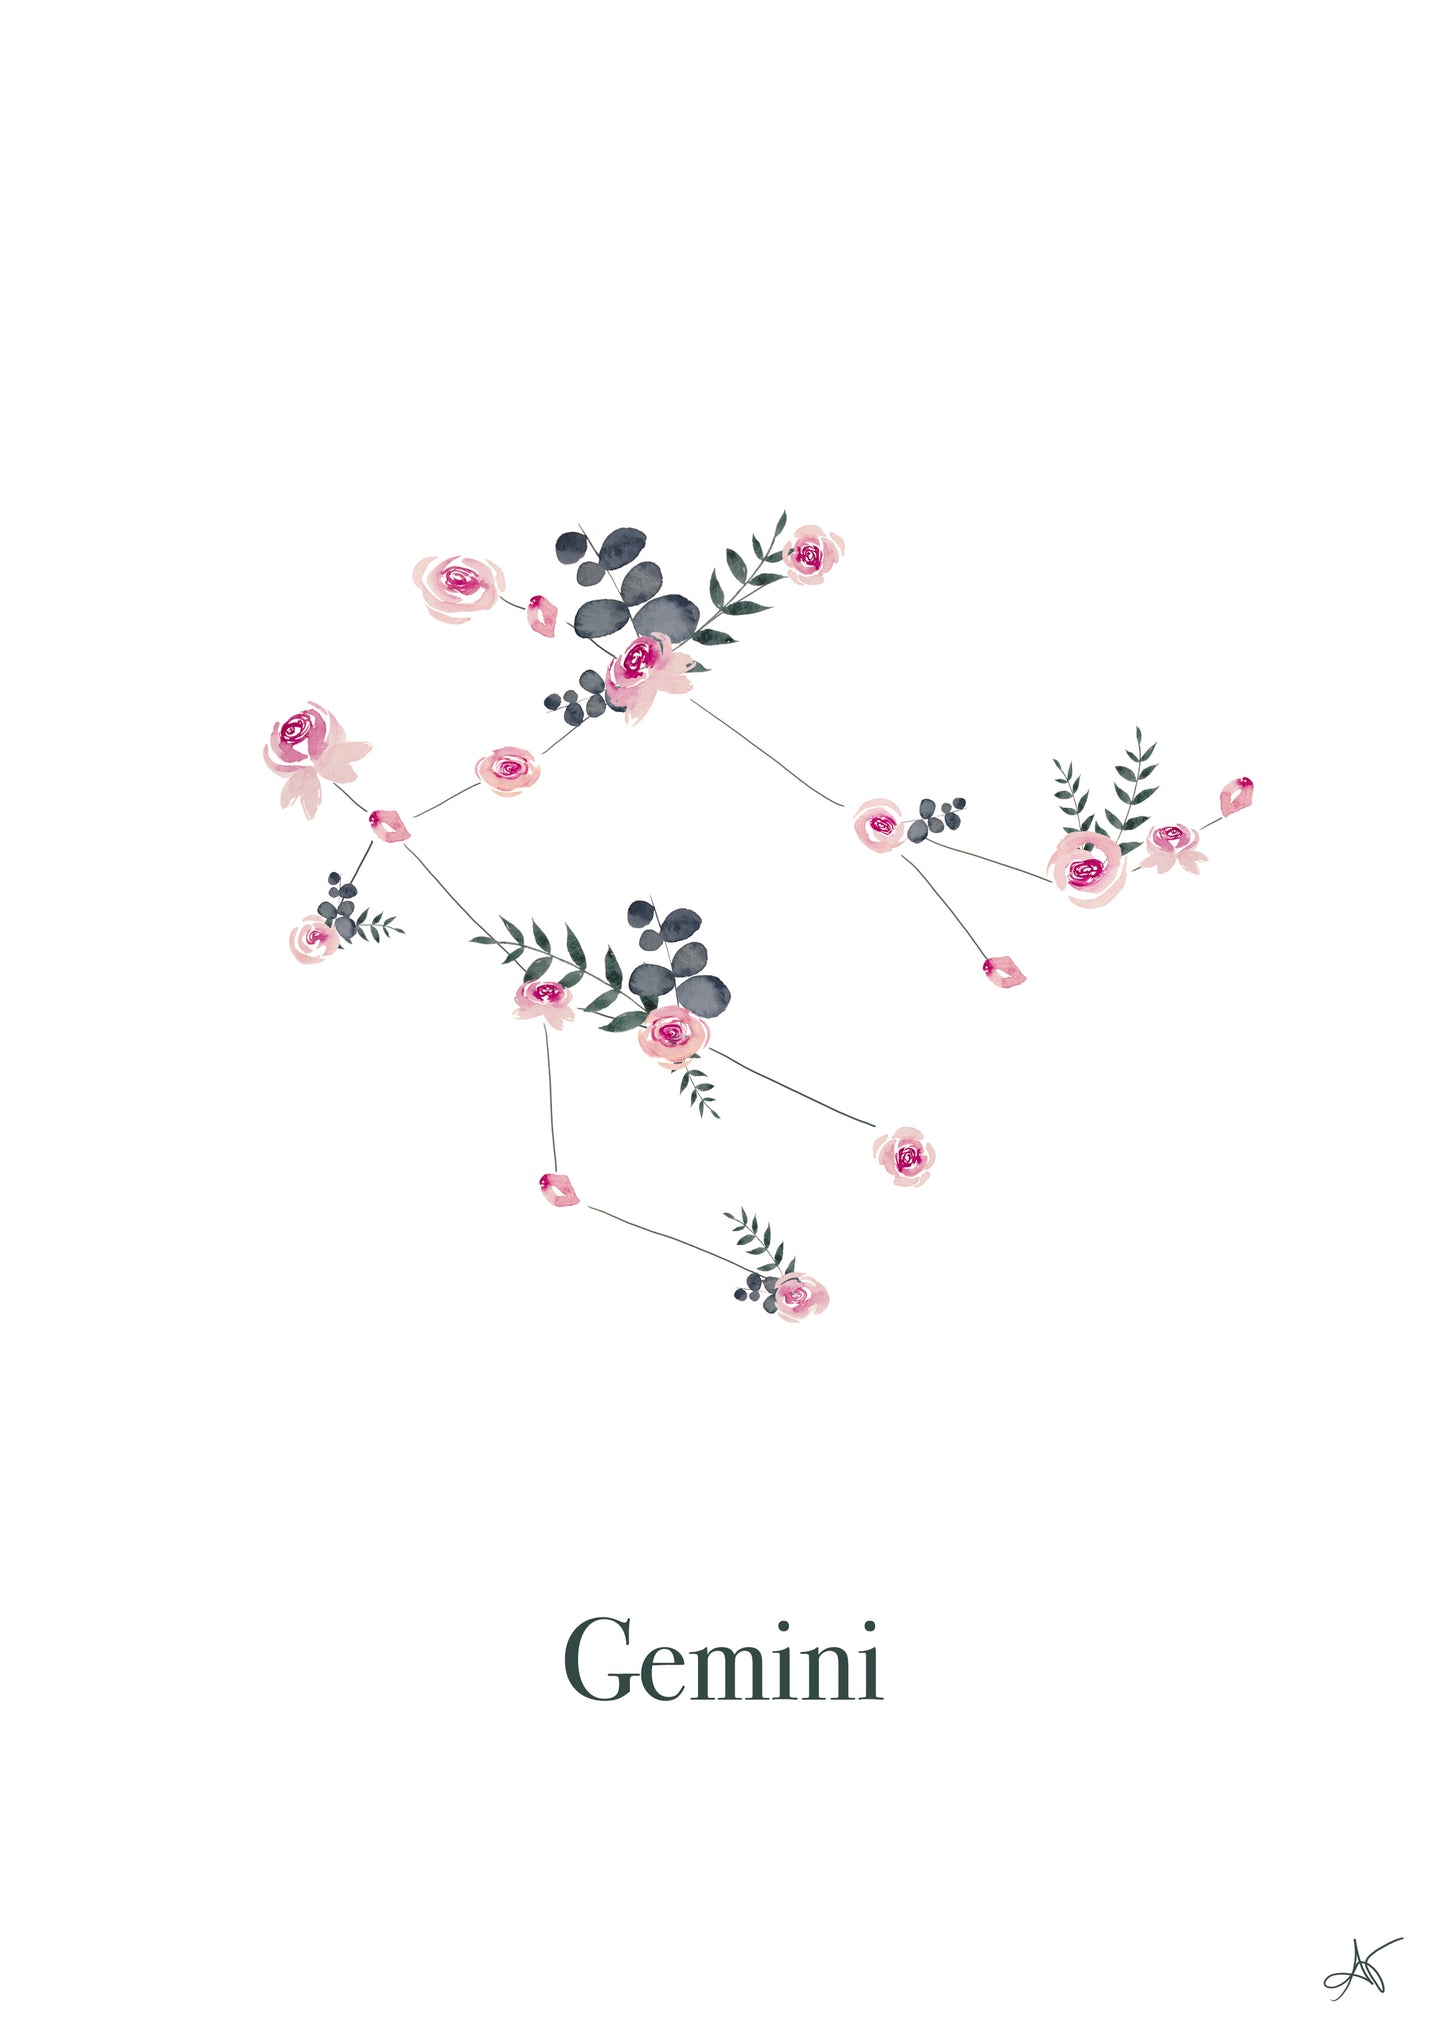 "Gemini" - Roses